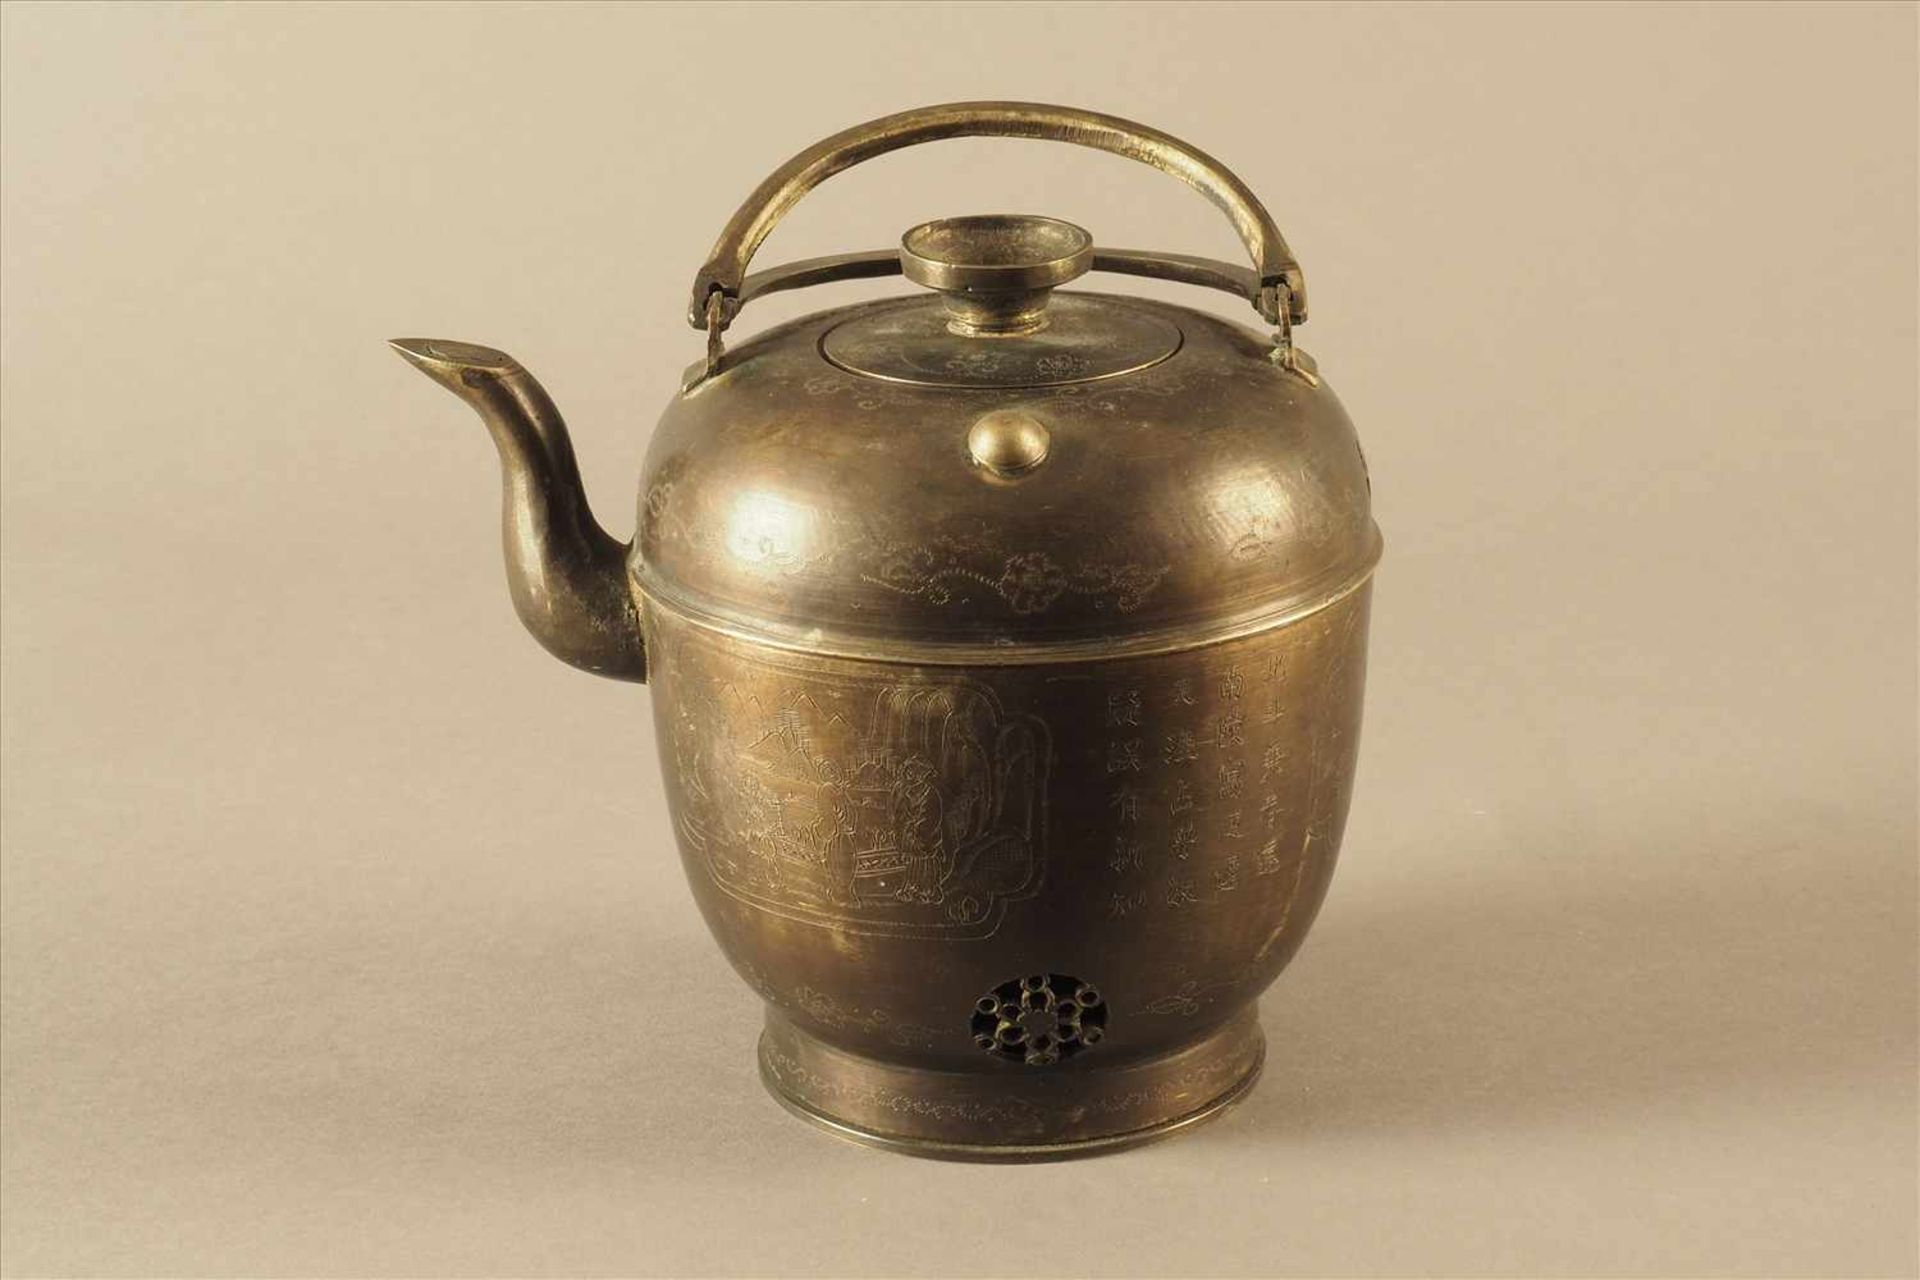 Asiatische TeekanneBronze, 19. Jh., prunkvoll graviert und beschriftet, Maße: H15 x D12,5cm.